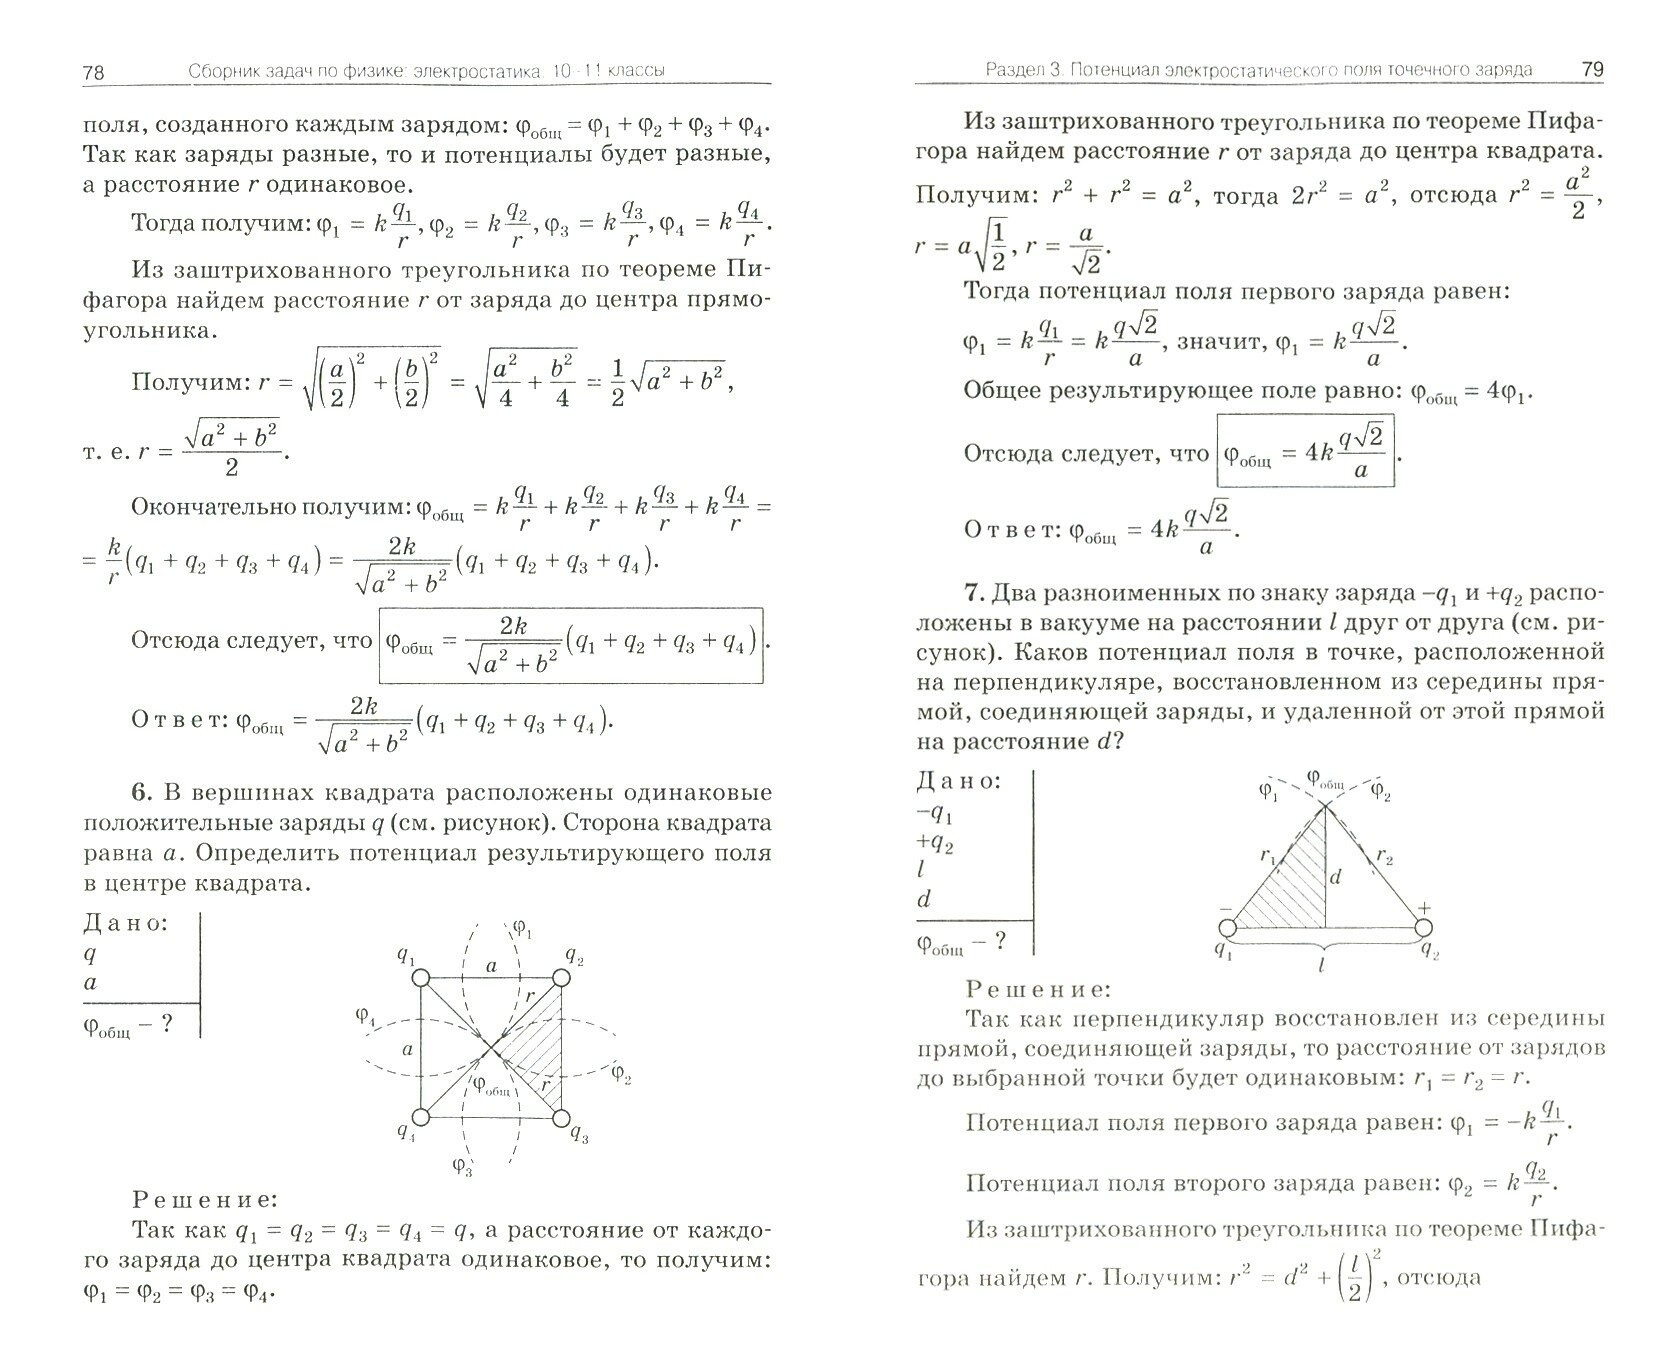 Физика. Сборник задач по физике. Электростатика. 10-11 классы